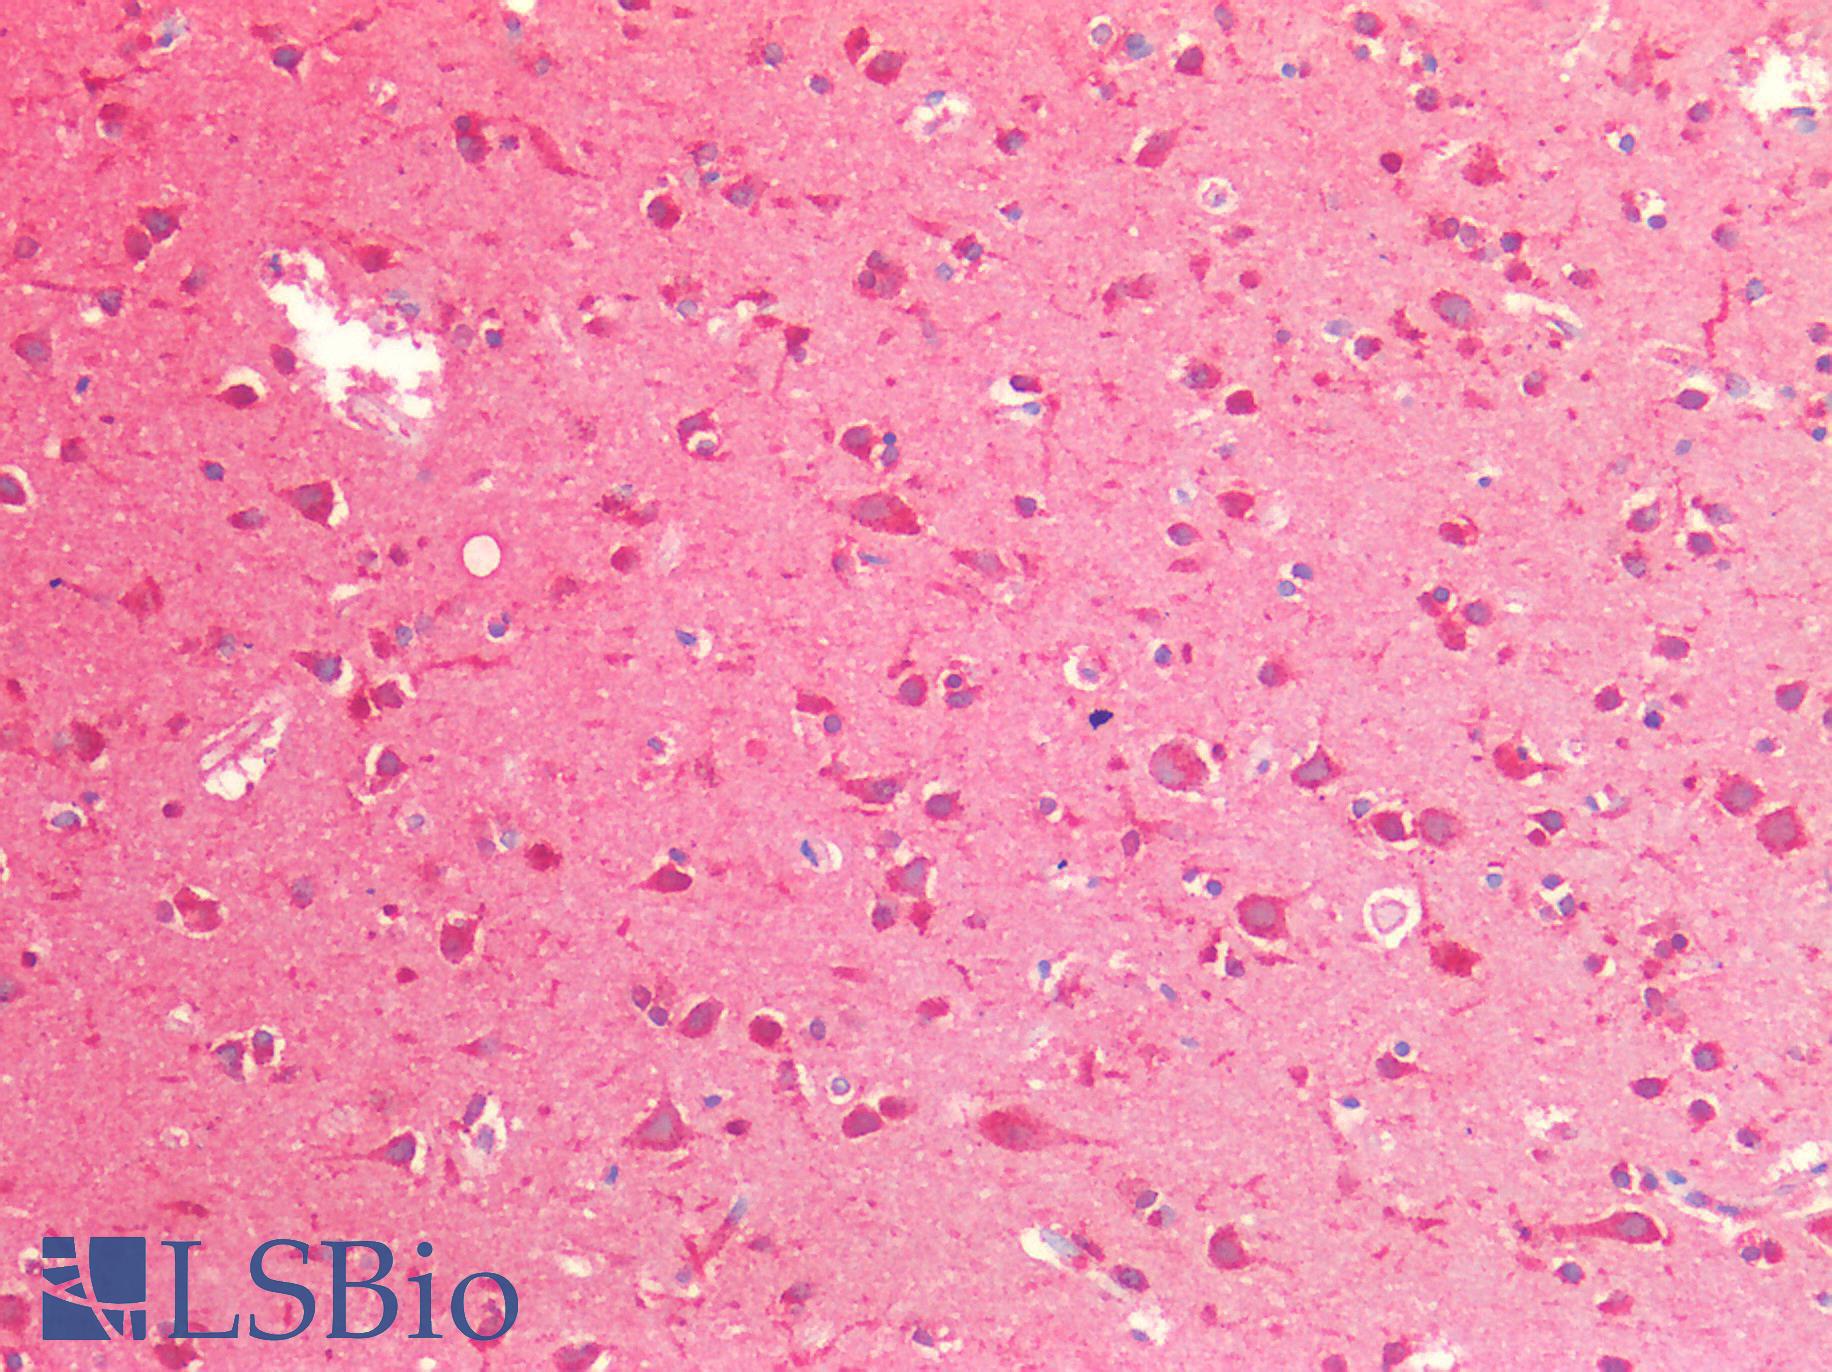 CTSB / Cathepsin B Antibody - Human Brain, Cortex: Formalin-Fixed, Paraffin-Embedded (FFPE)